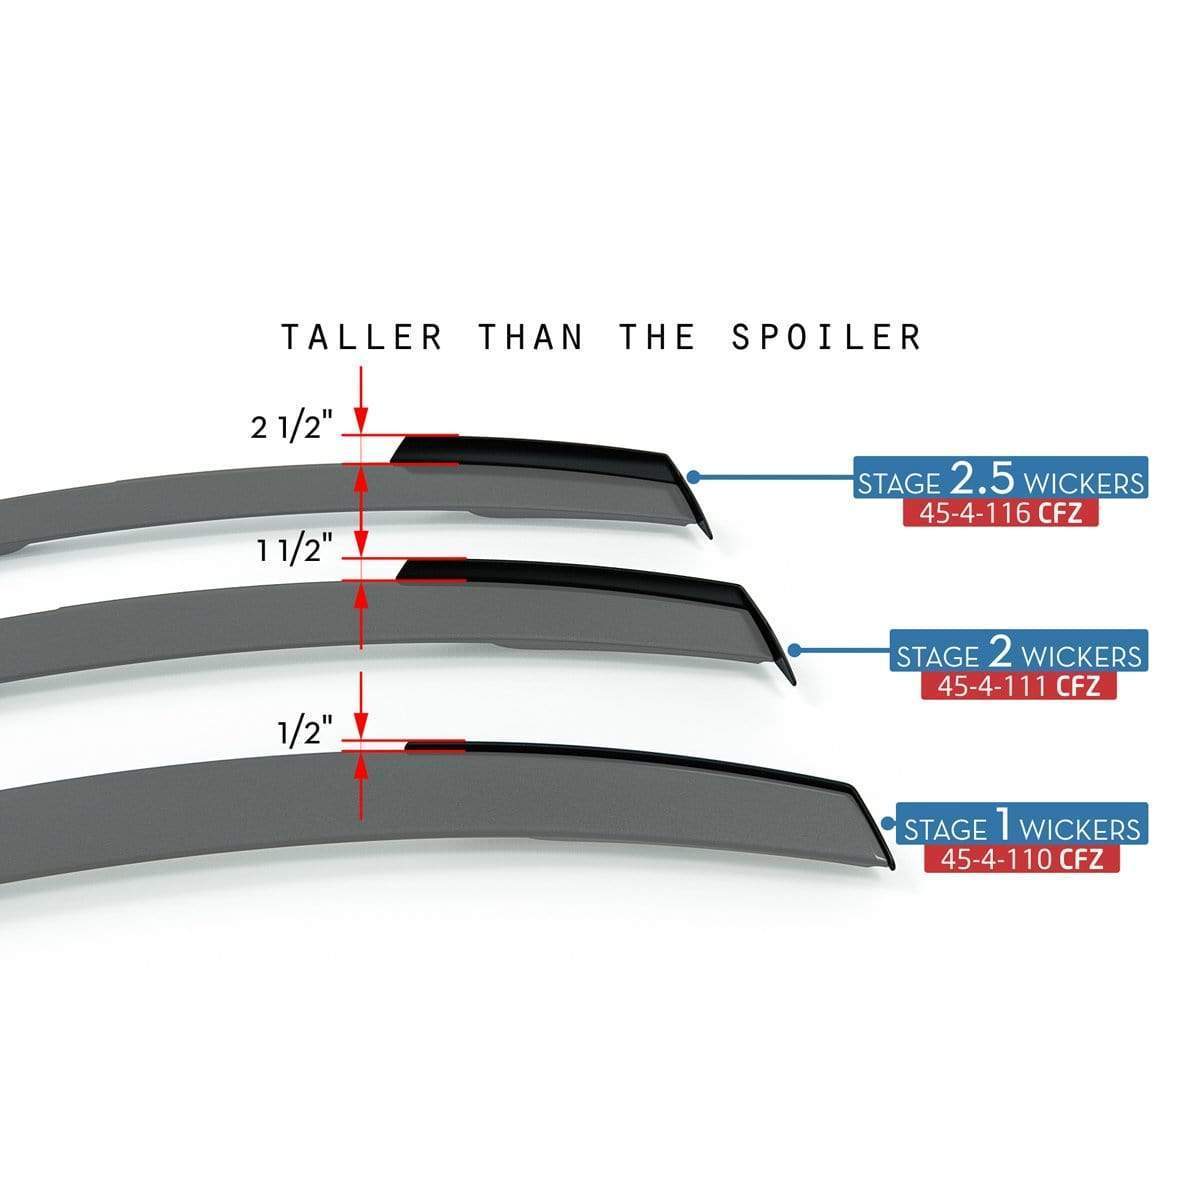 Z06 Spoiler Wicker Conversion Kit for C7 Corvette - Stage 2/3 - SKU 45-4-125 - ACS Composite